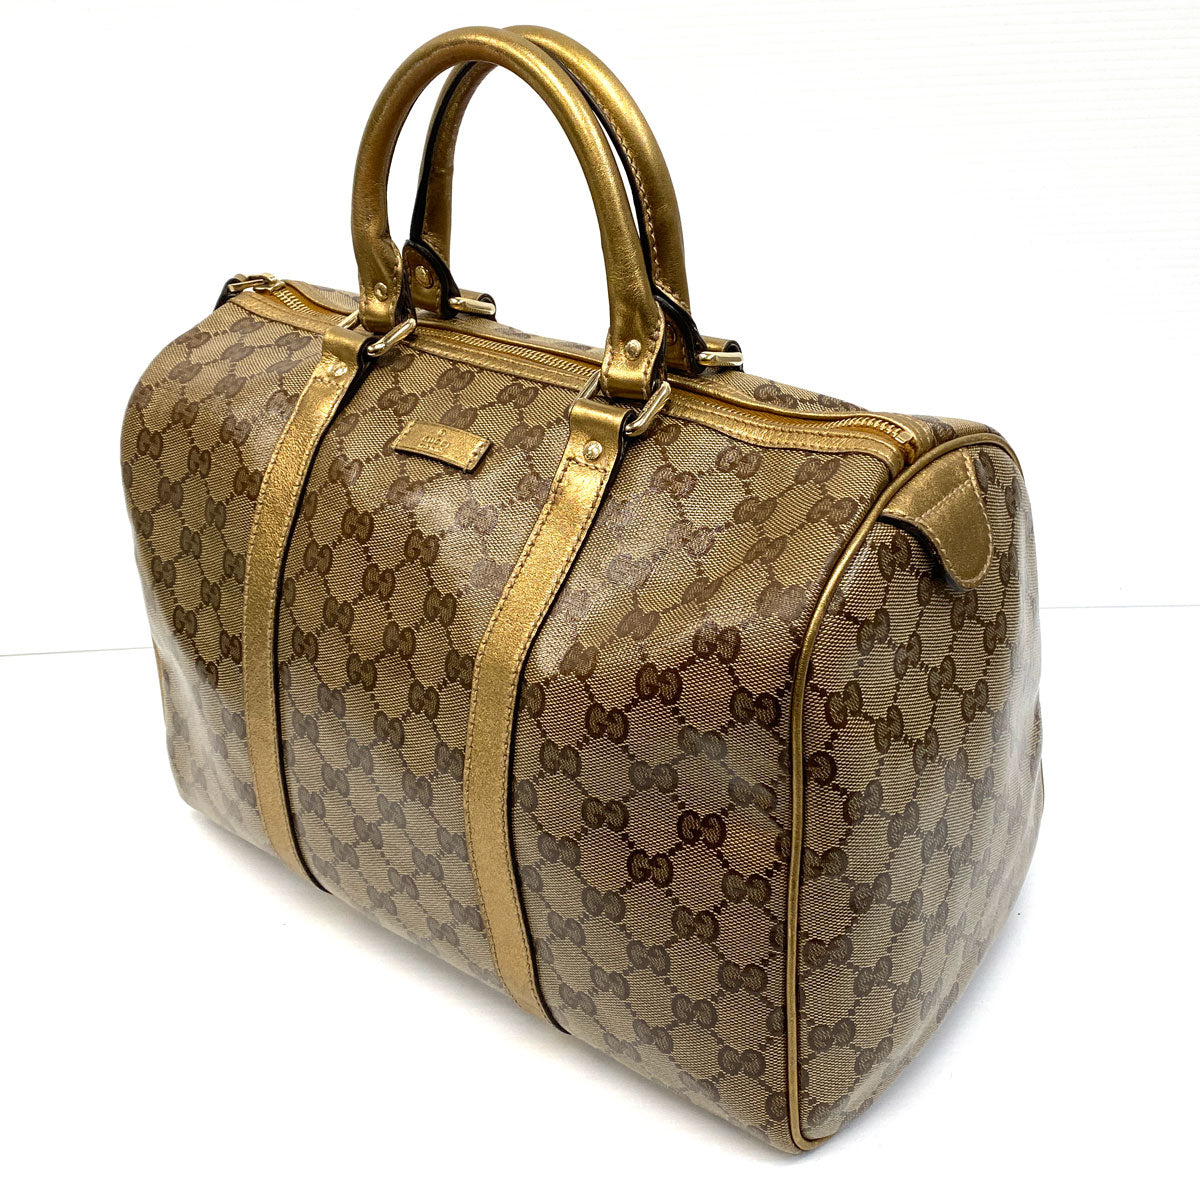 Gucci GG Crystal Joy Boston Bag